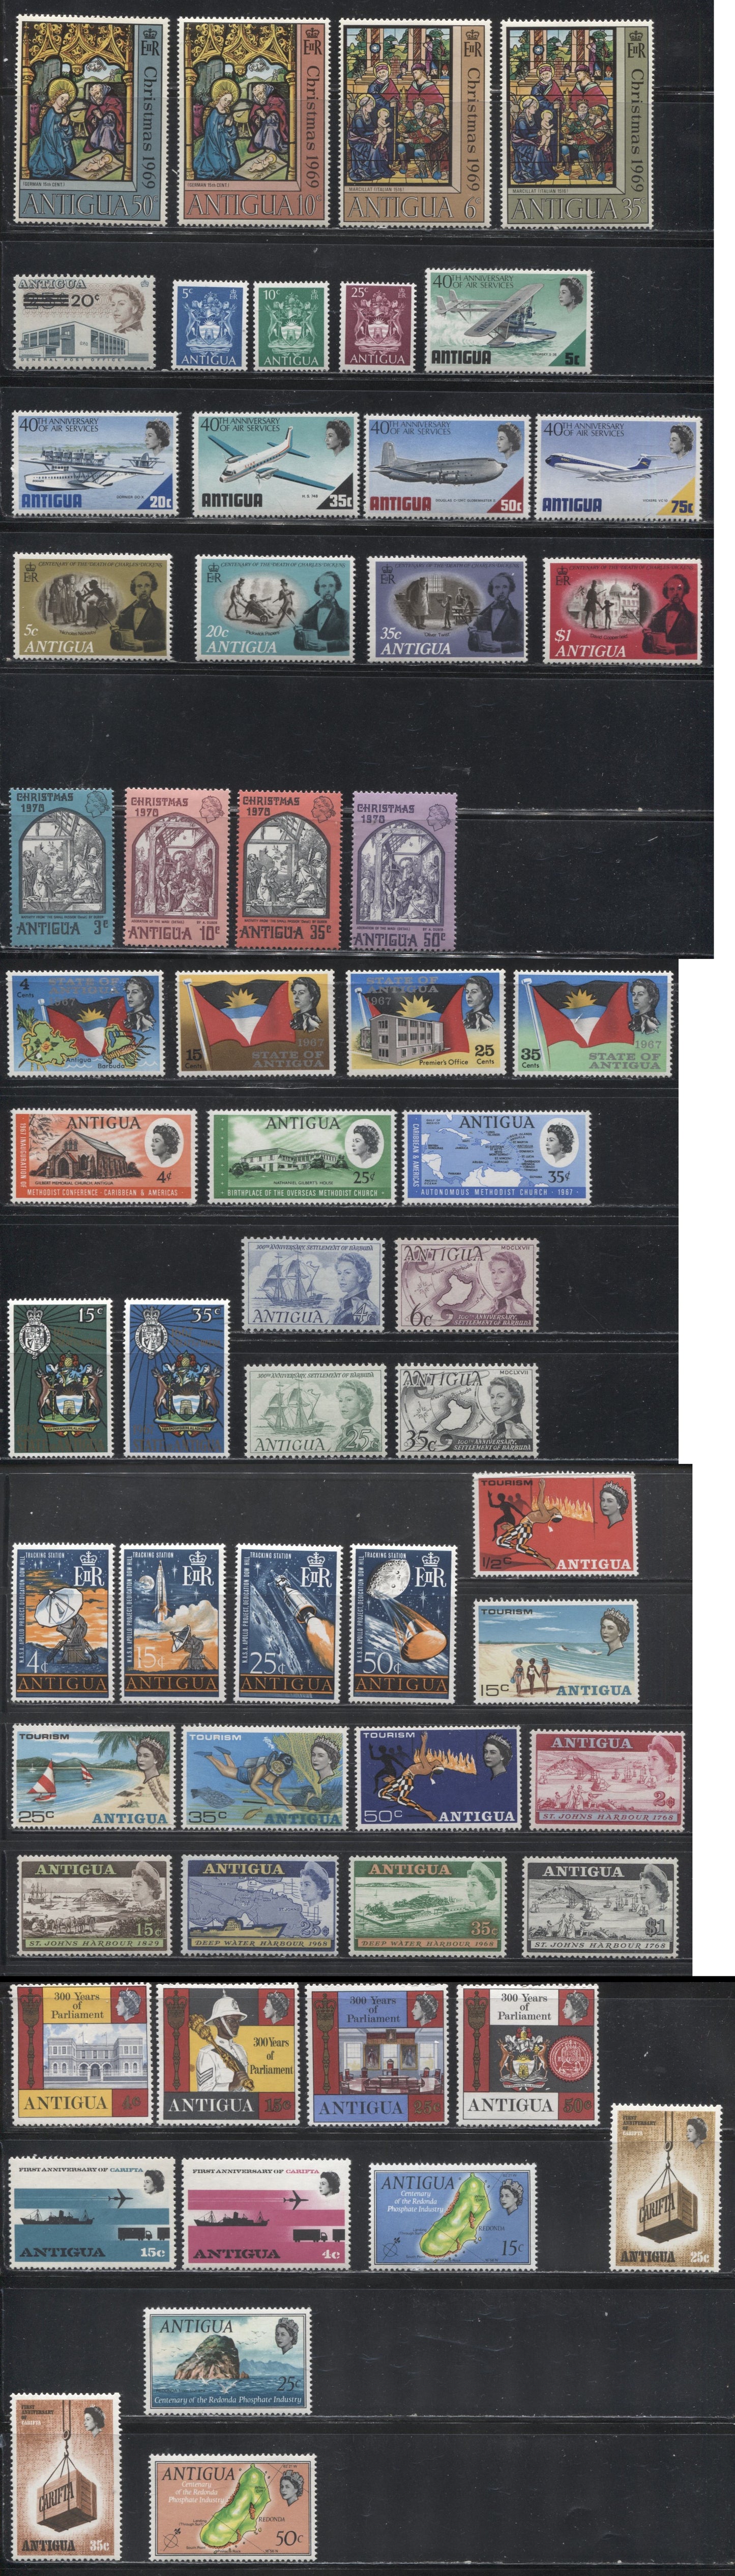 Antigua SG#199-257, 257A-259A, 260-268, 286-288, 1967-1970 Commemoratives, a Substantially Complete VFNH Group